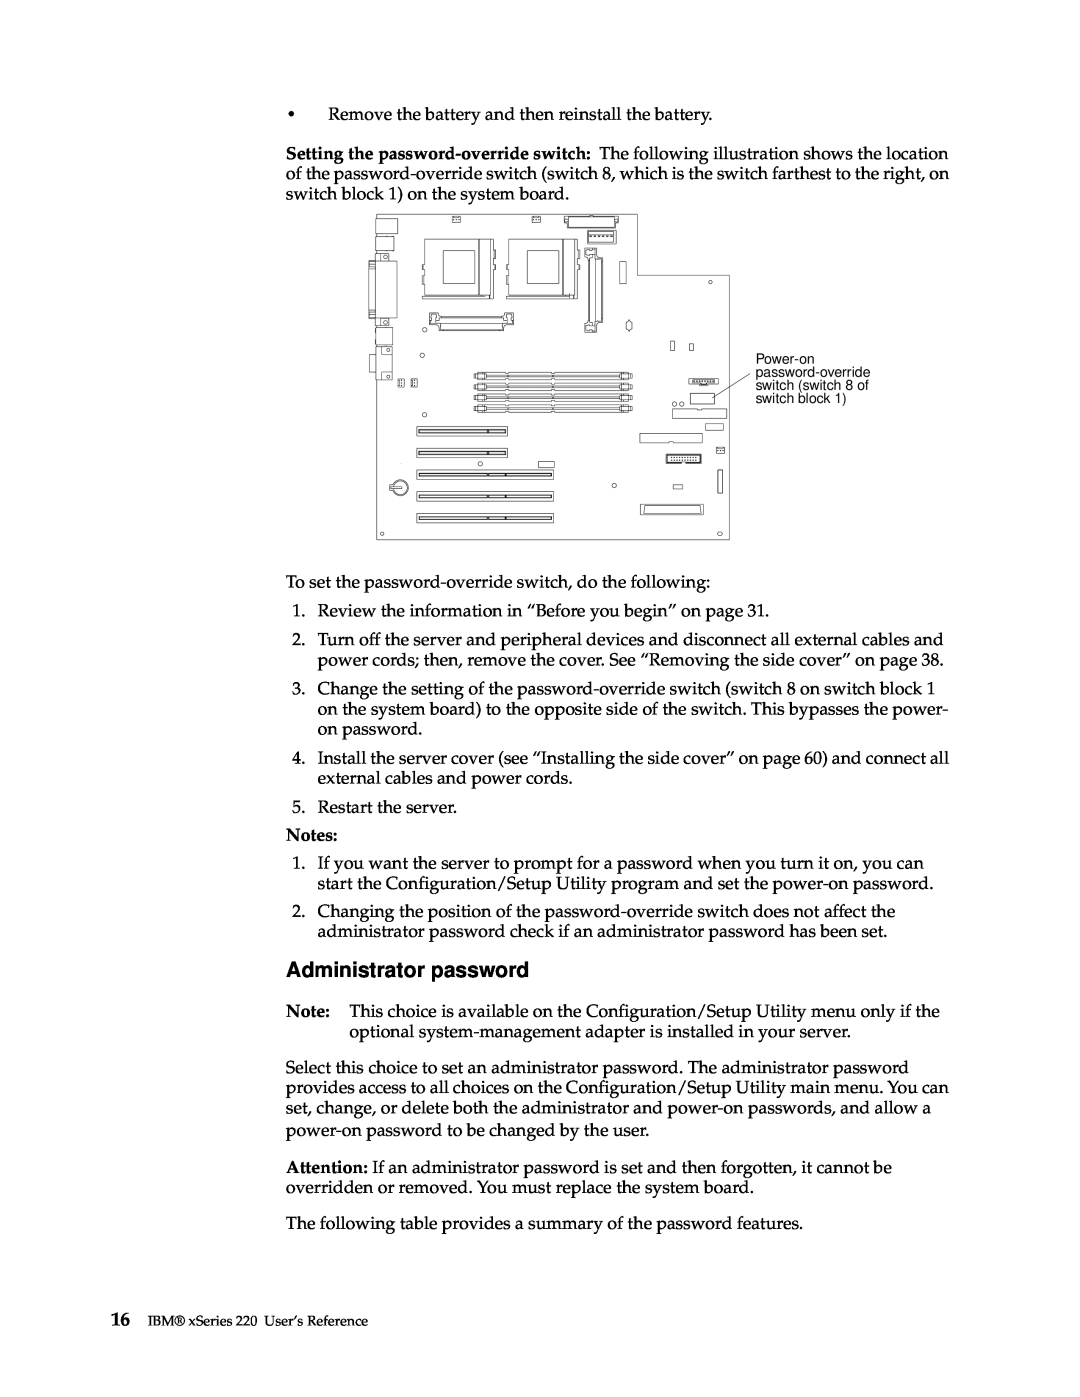 IBM manual Administrator password, IBM xSeries 220 User’s Reference 